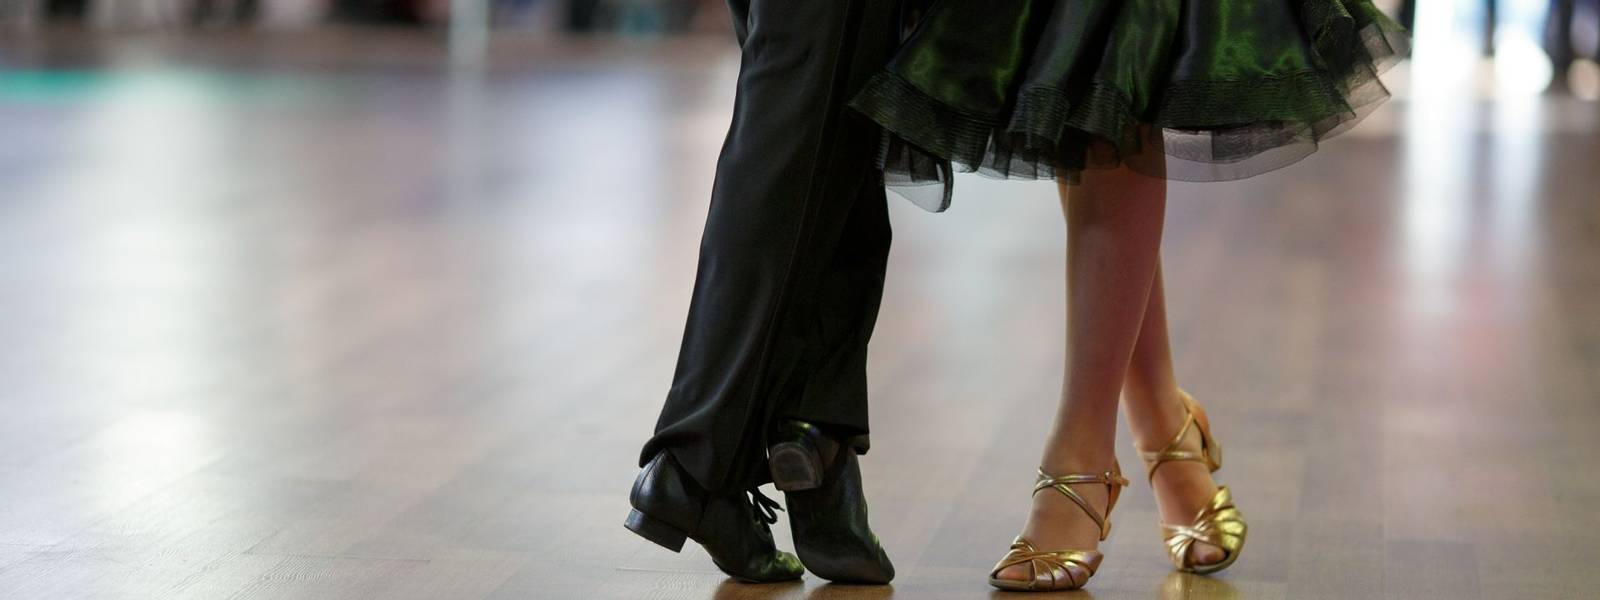 Closeup of dancer's legs as they do the ballroom dance